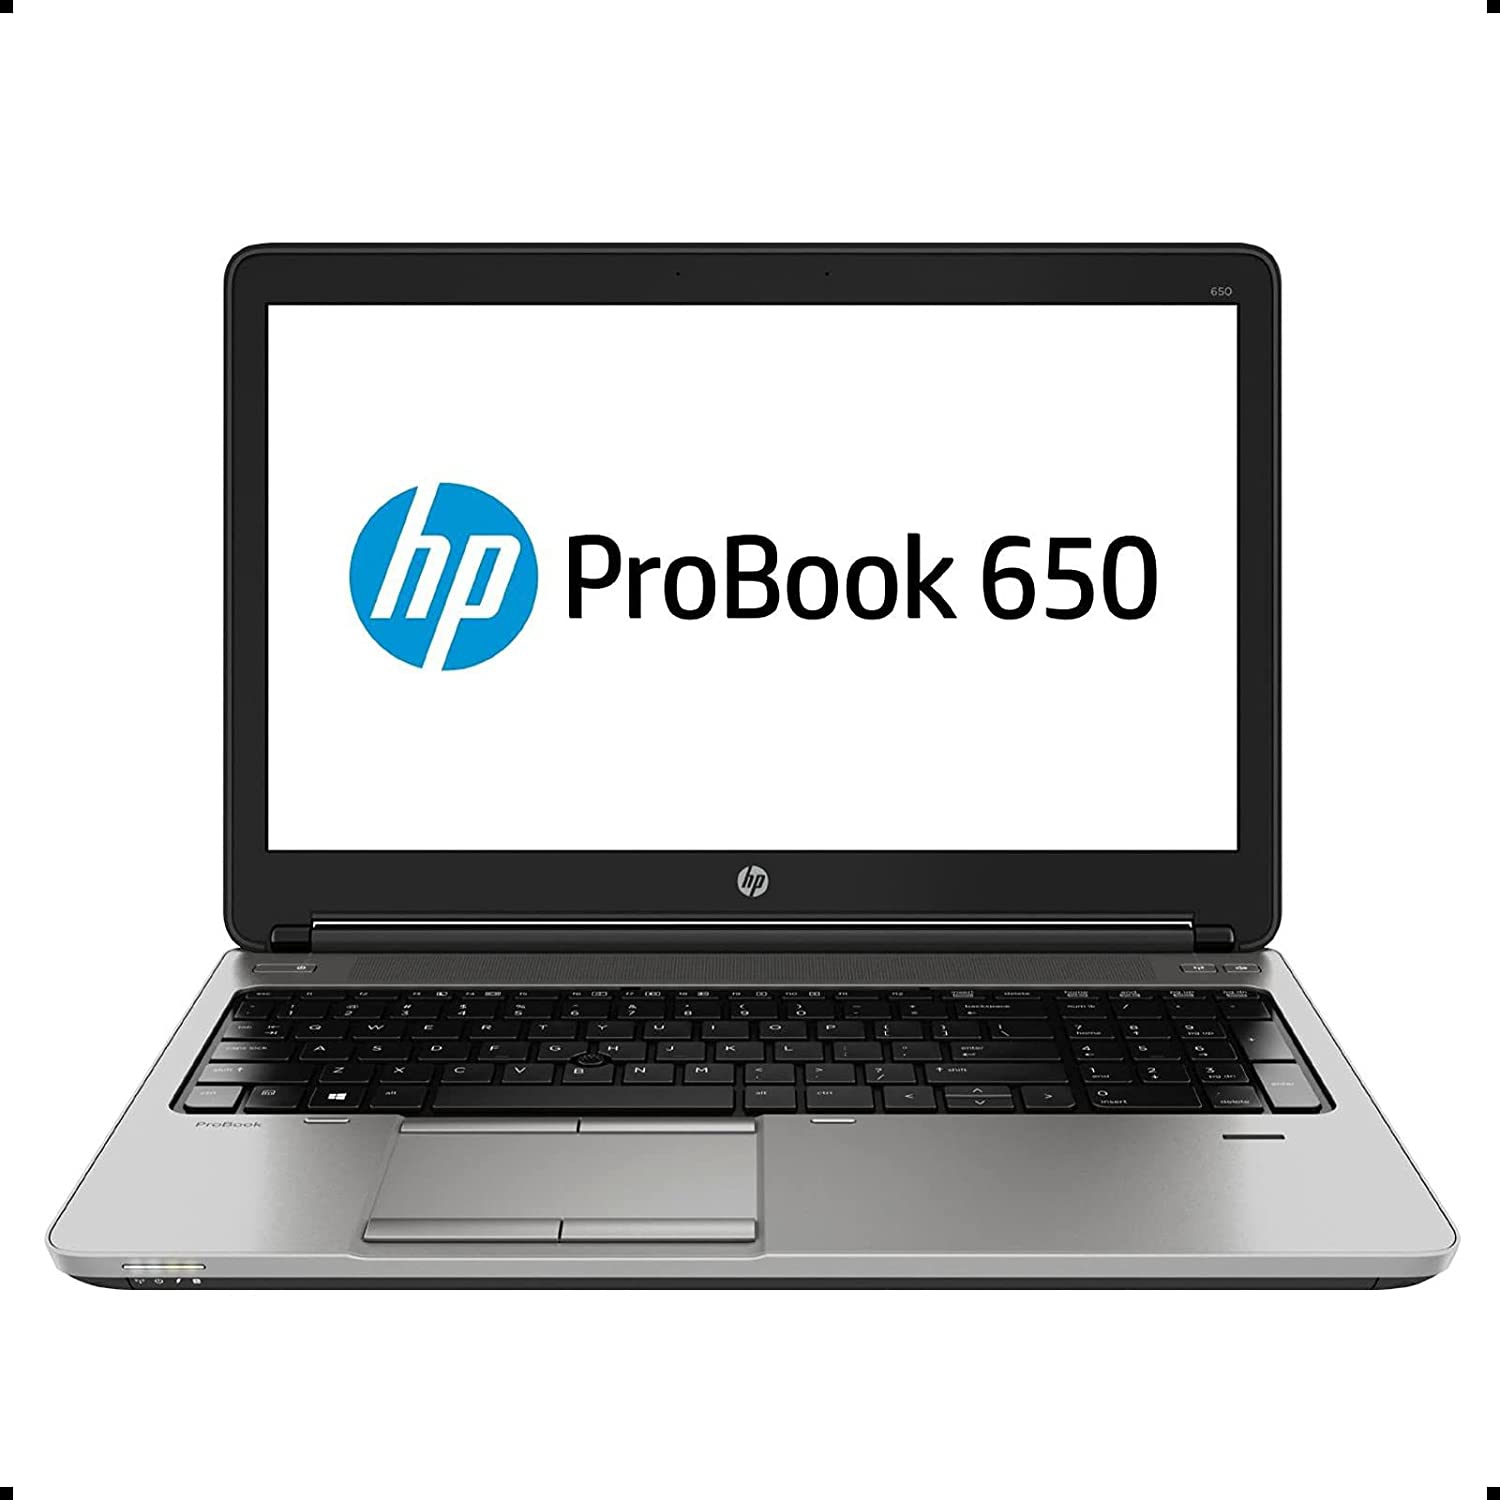 Refurbished (Fair) - HP Probook 650 G1 Laptop Intel Core i5 4200M 2.5GHz 16GB RAM 256GB SSD DVDRW Win 10 Pro 15.6" HD LCD Webcam